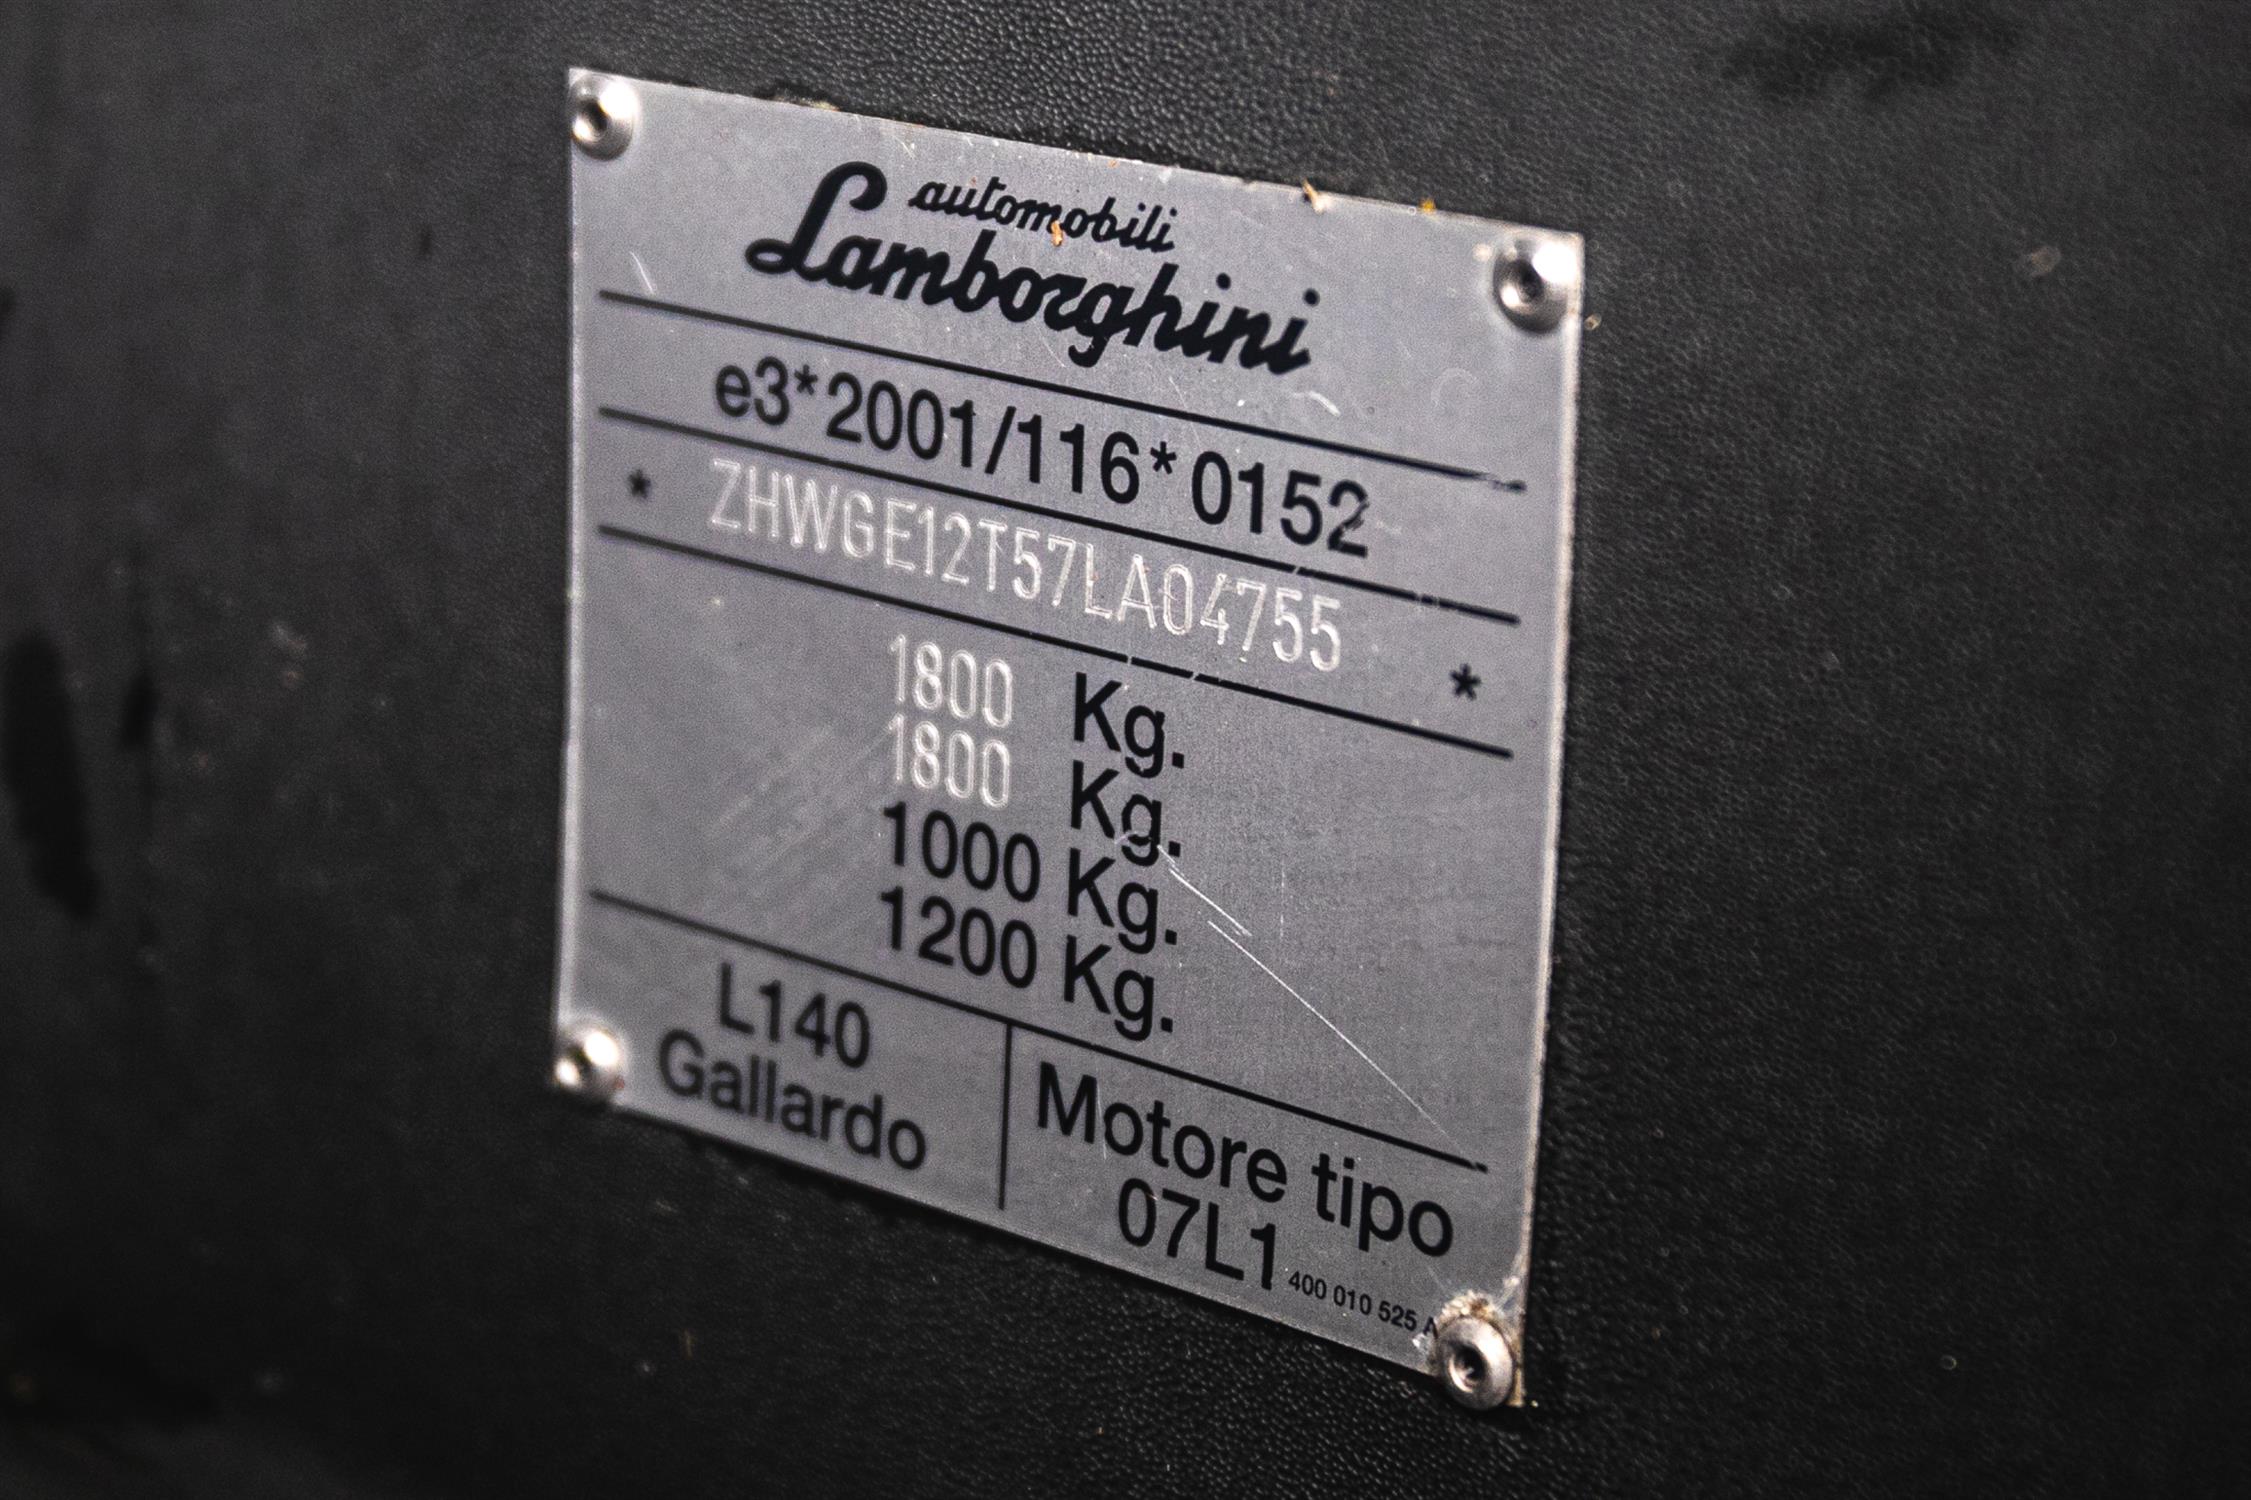 2007 Lamborghini Gallardo Nera (#061/185) - Image 7 of 10